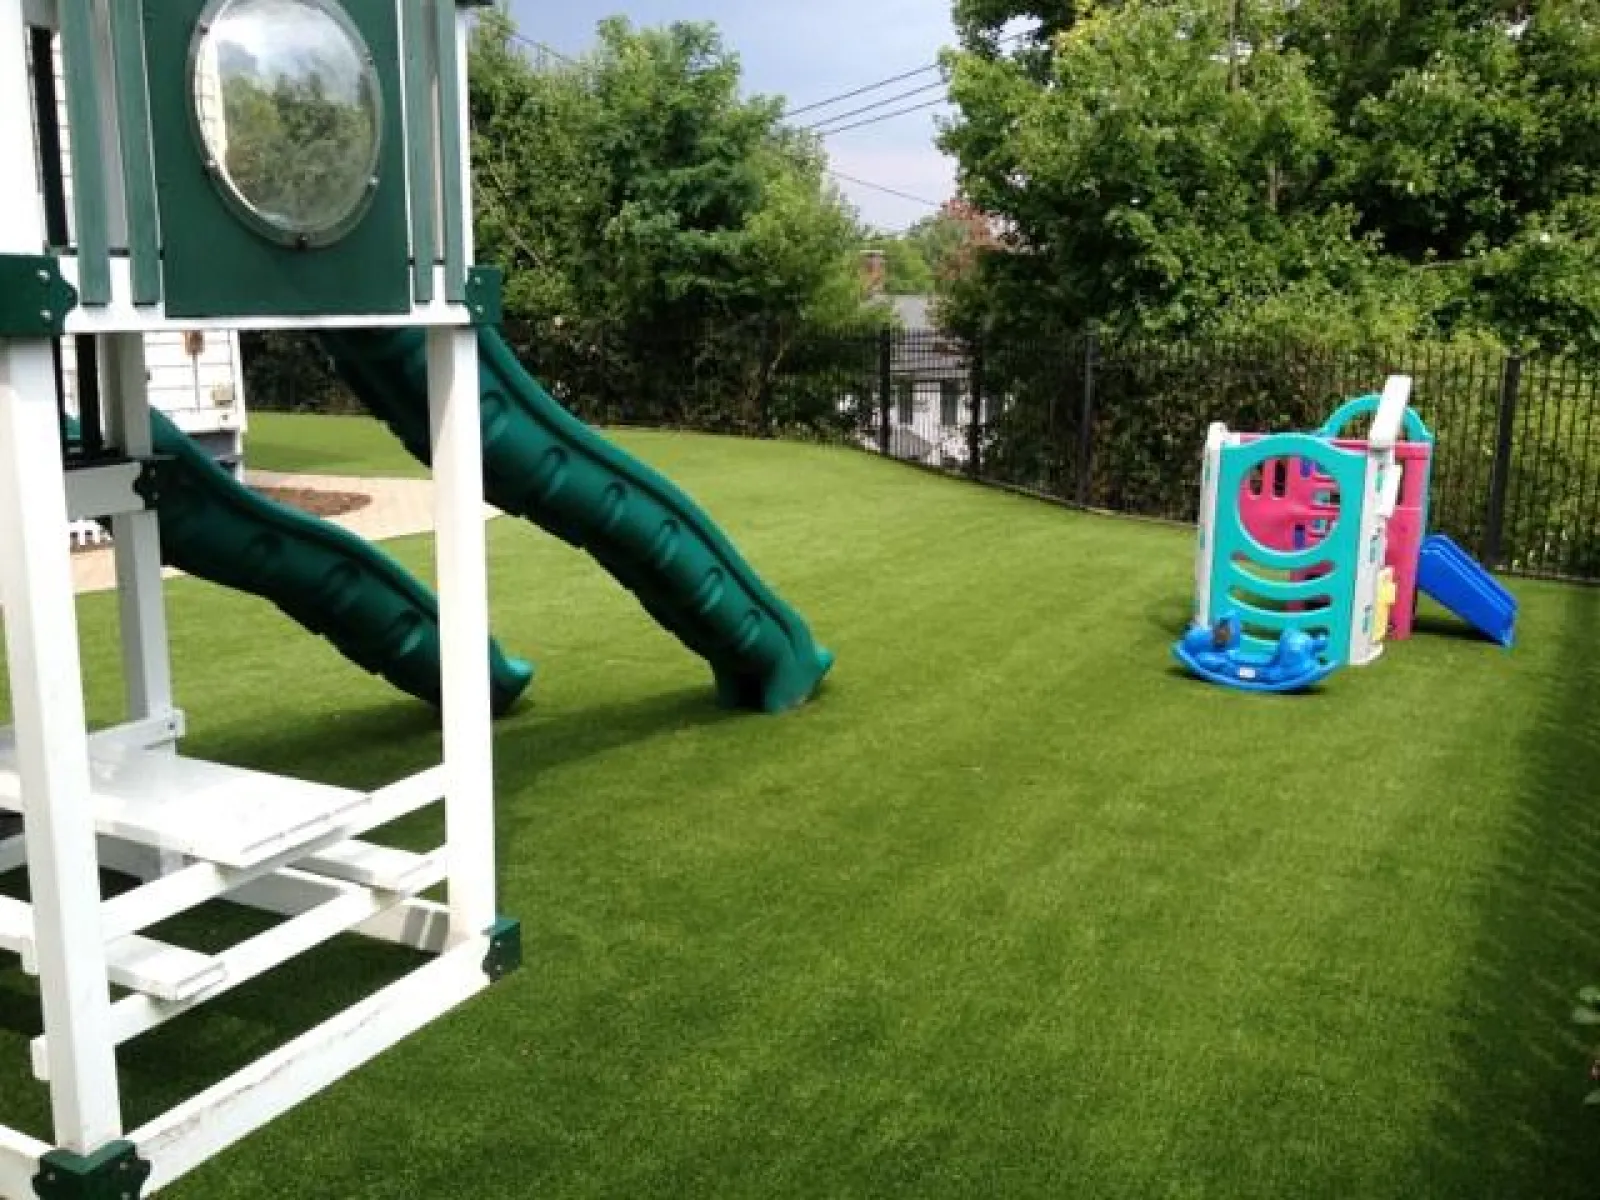 a play set in a yard